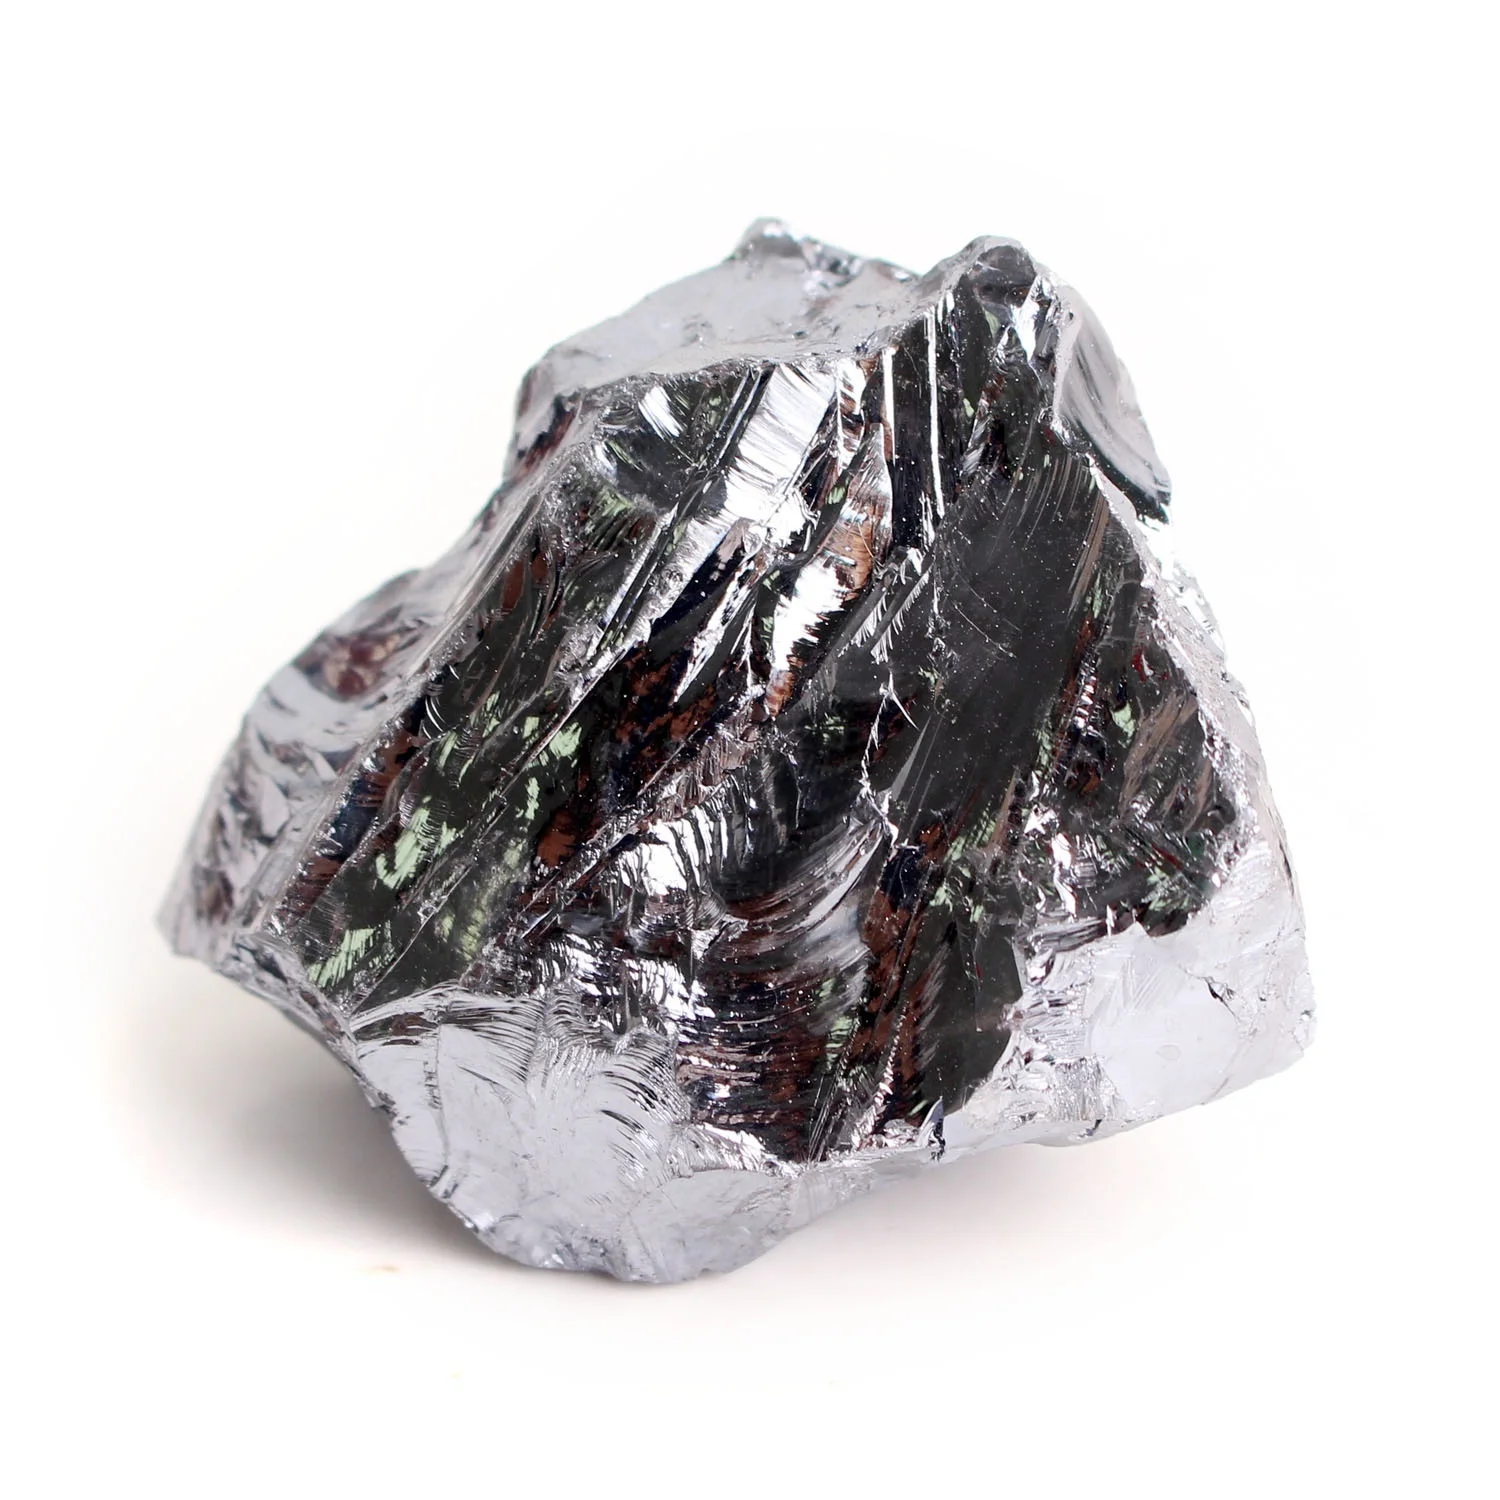 

1PC Rare Raw Terahertz Stone Origin Crystal THz Stones Irregular Rough Quartz Minerals Healthy Reiki Healing Gift Decor